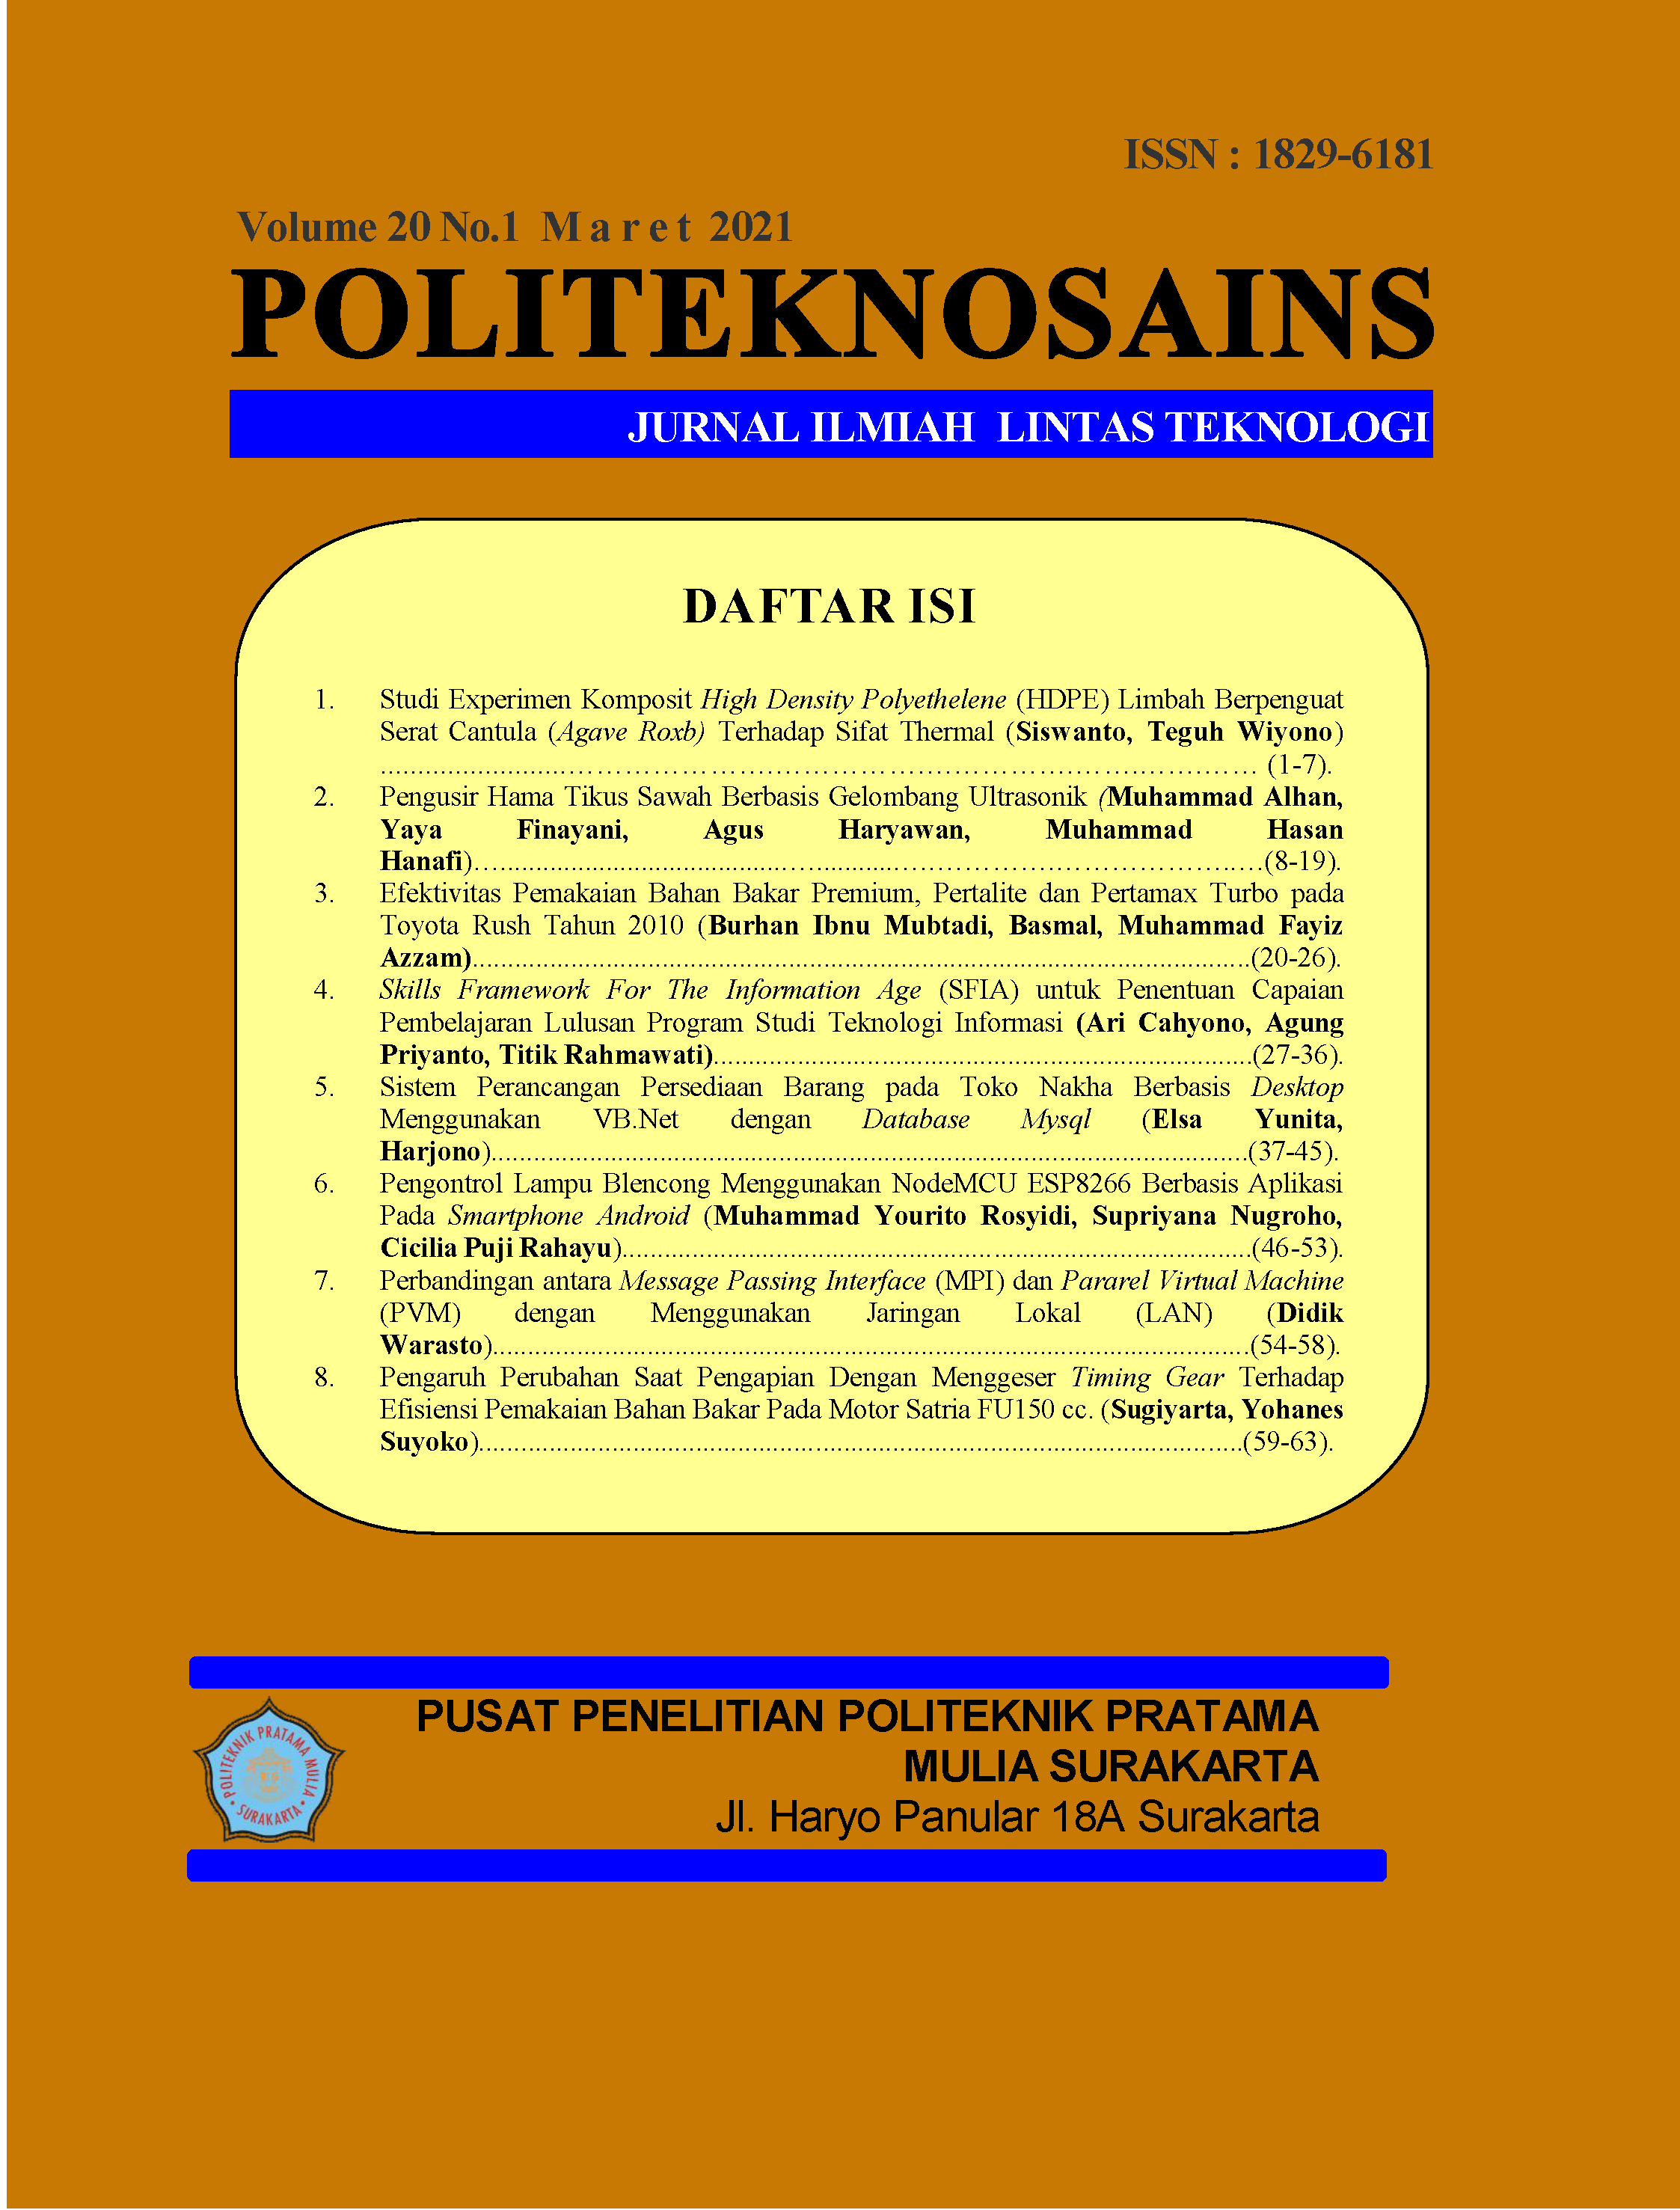 					Lihat Vol 20 No 1 (2021): Jurnal Politeknosains Volume 20 Nomor 1 - Maret 2021
				